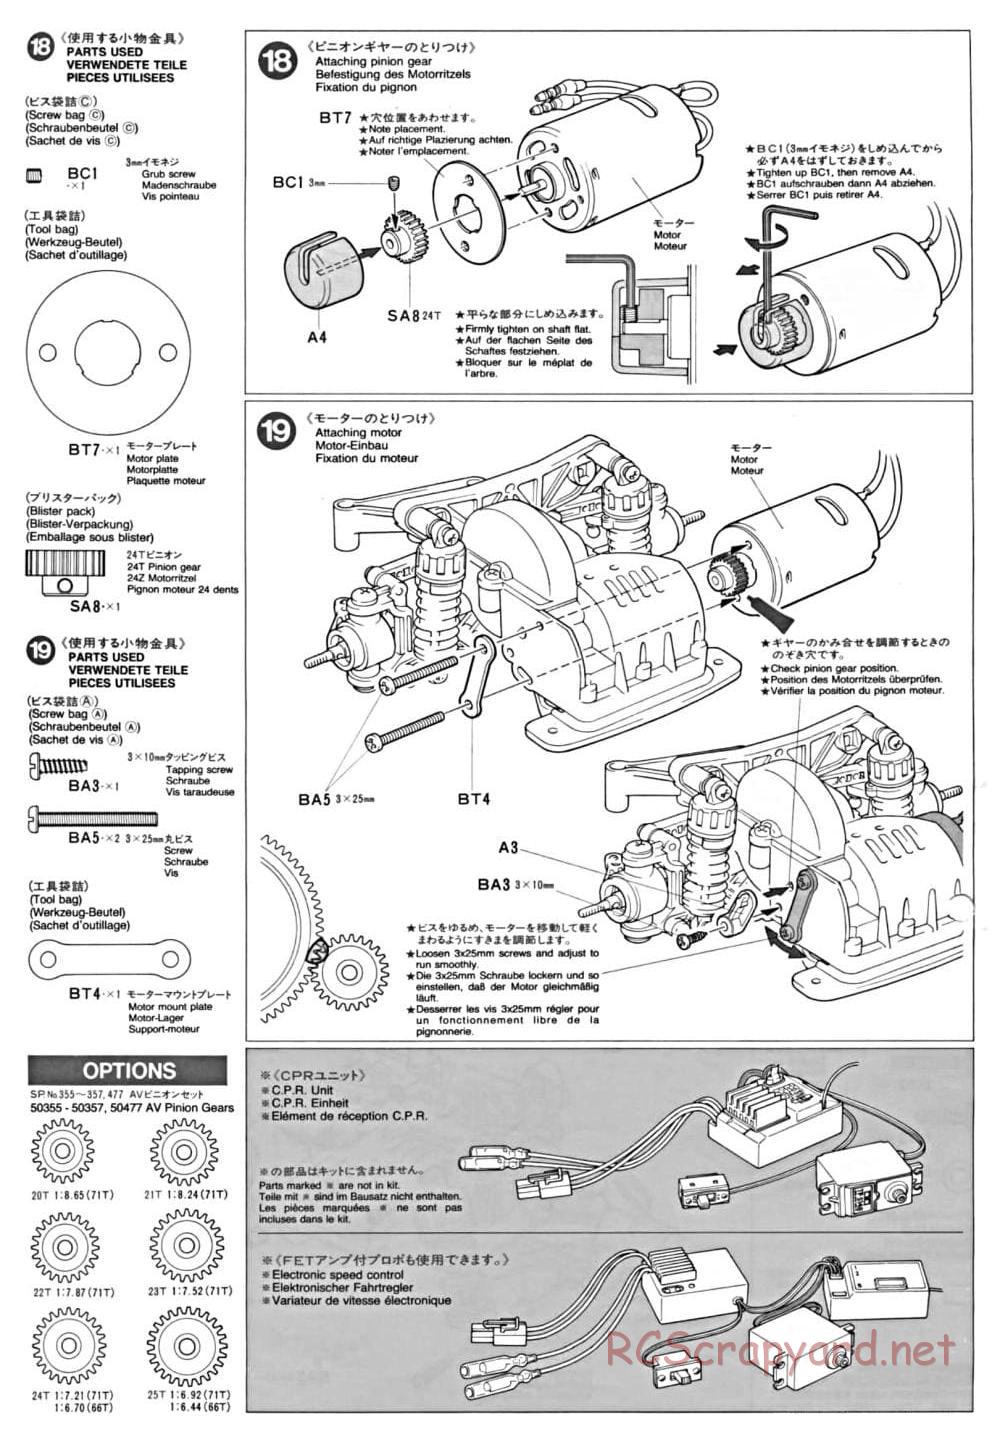 Tamiya - FF-01 Chassis - Manual - Page 10